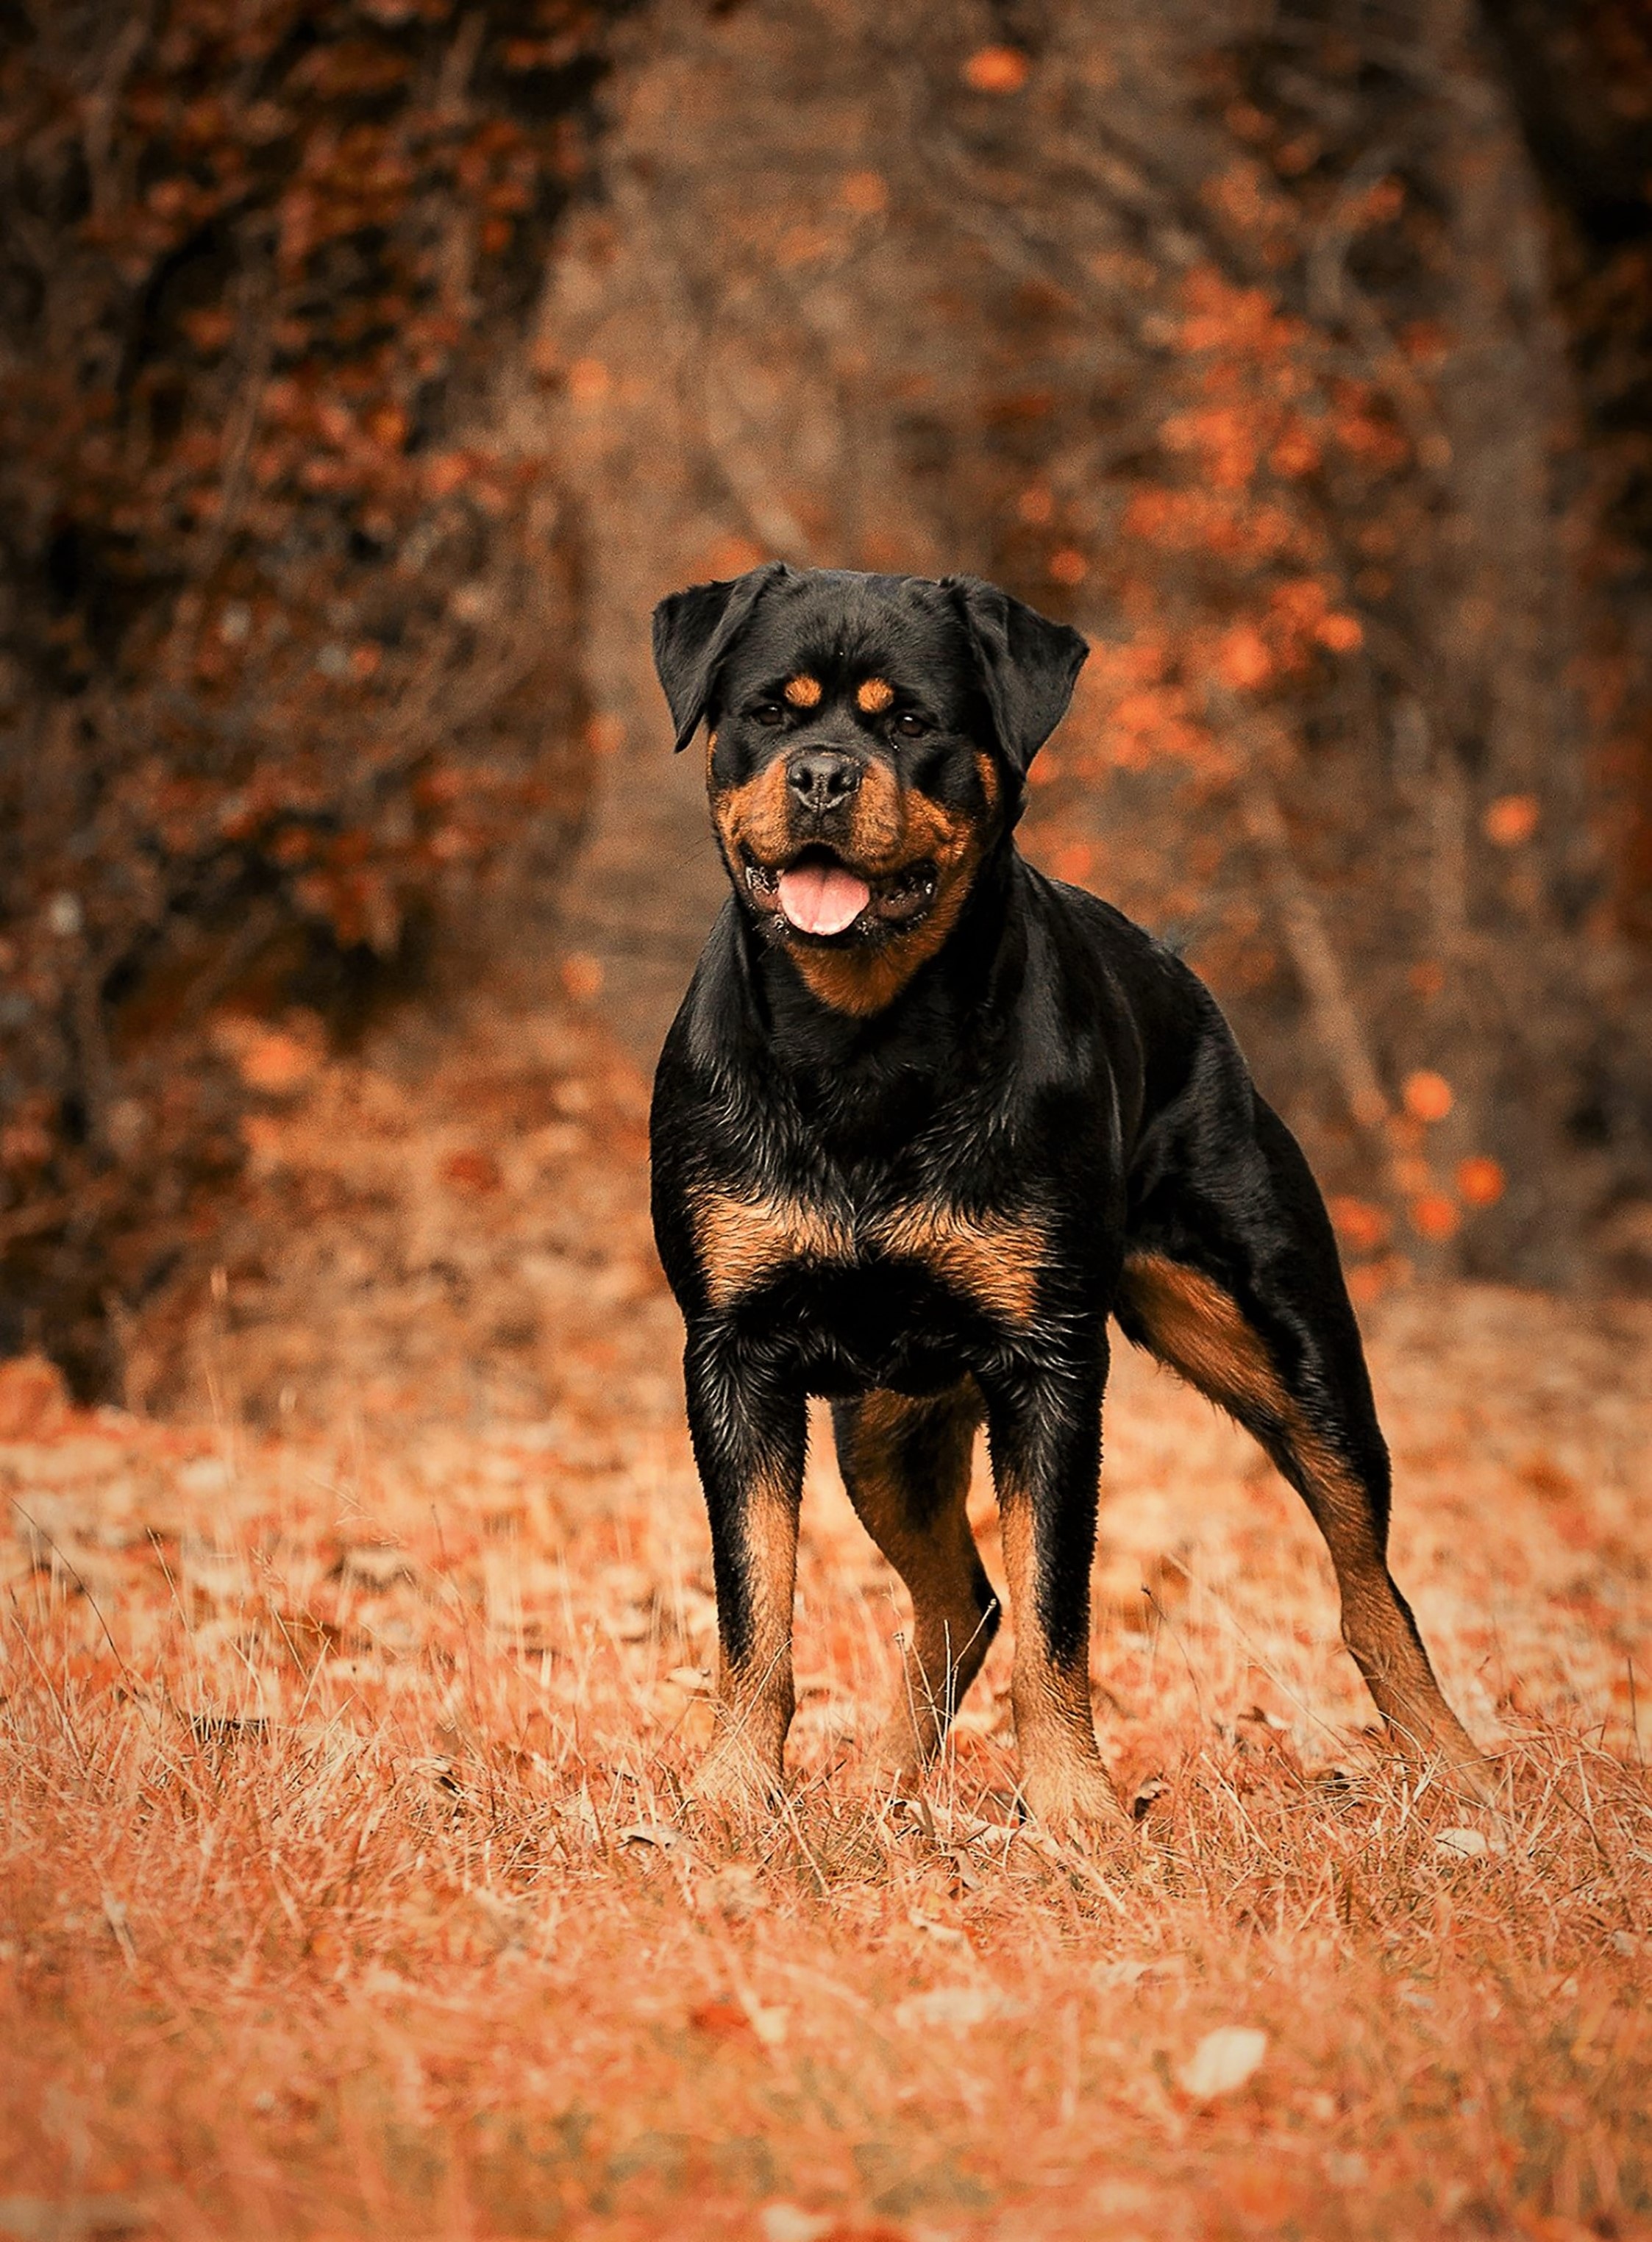 Black Dog, Animal, Black, Dog, Friend, HQ Photo